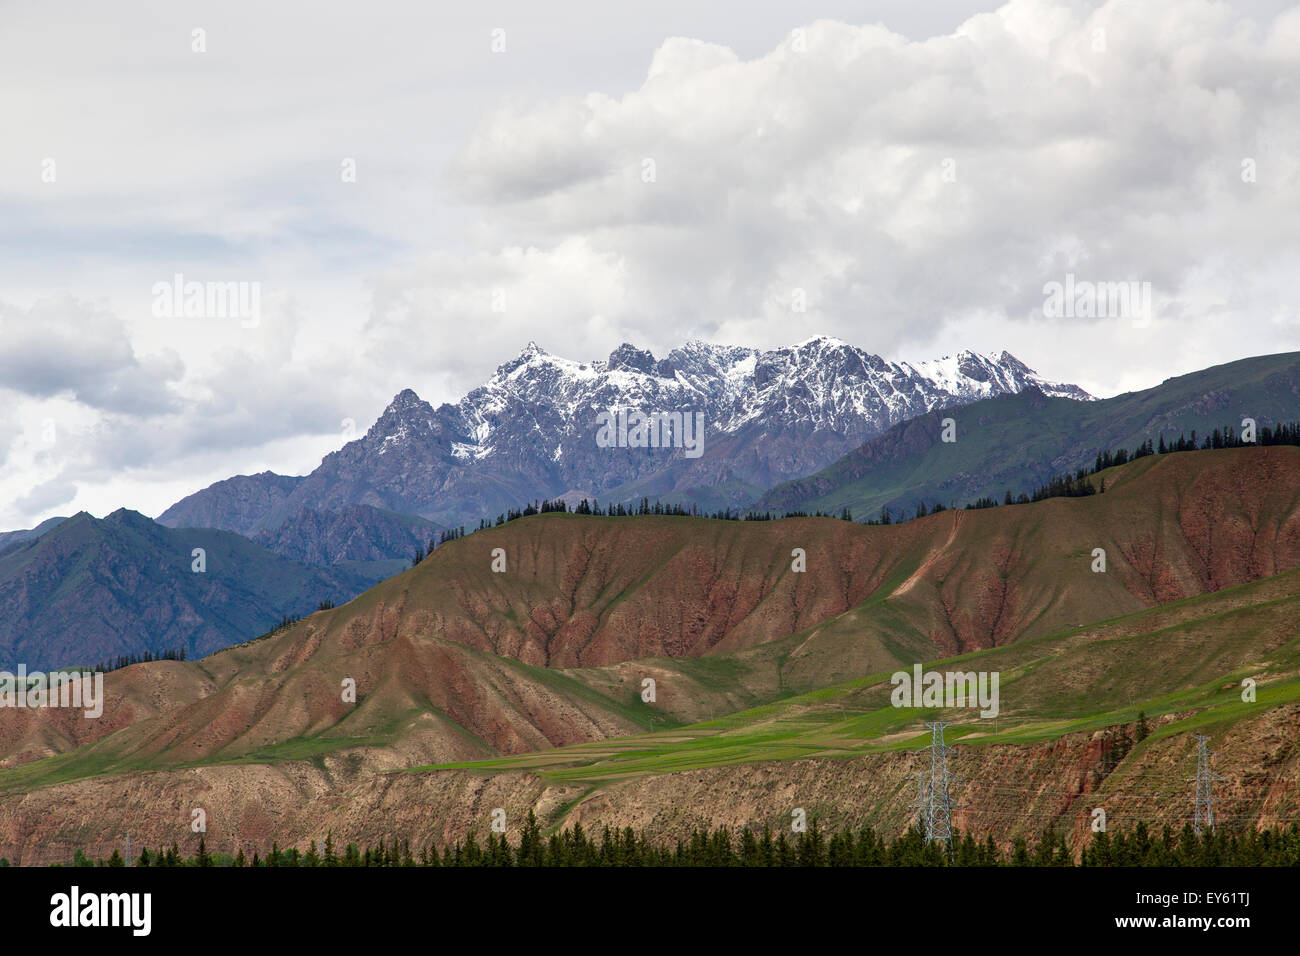 Qilian mountain in Qinghai province, China Stock Photo